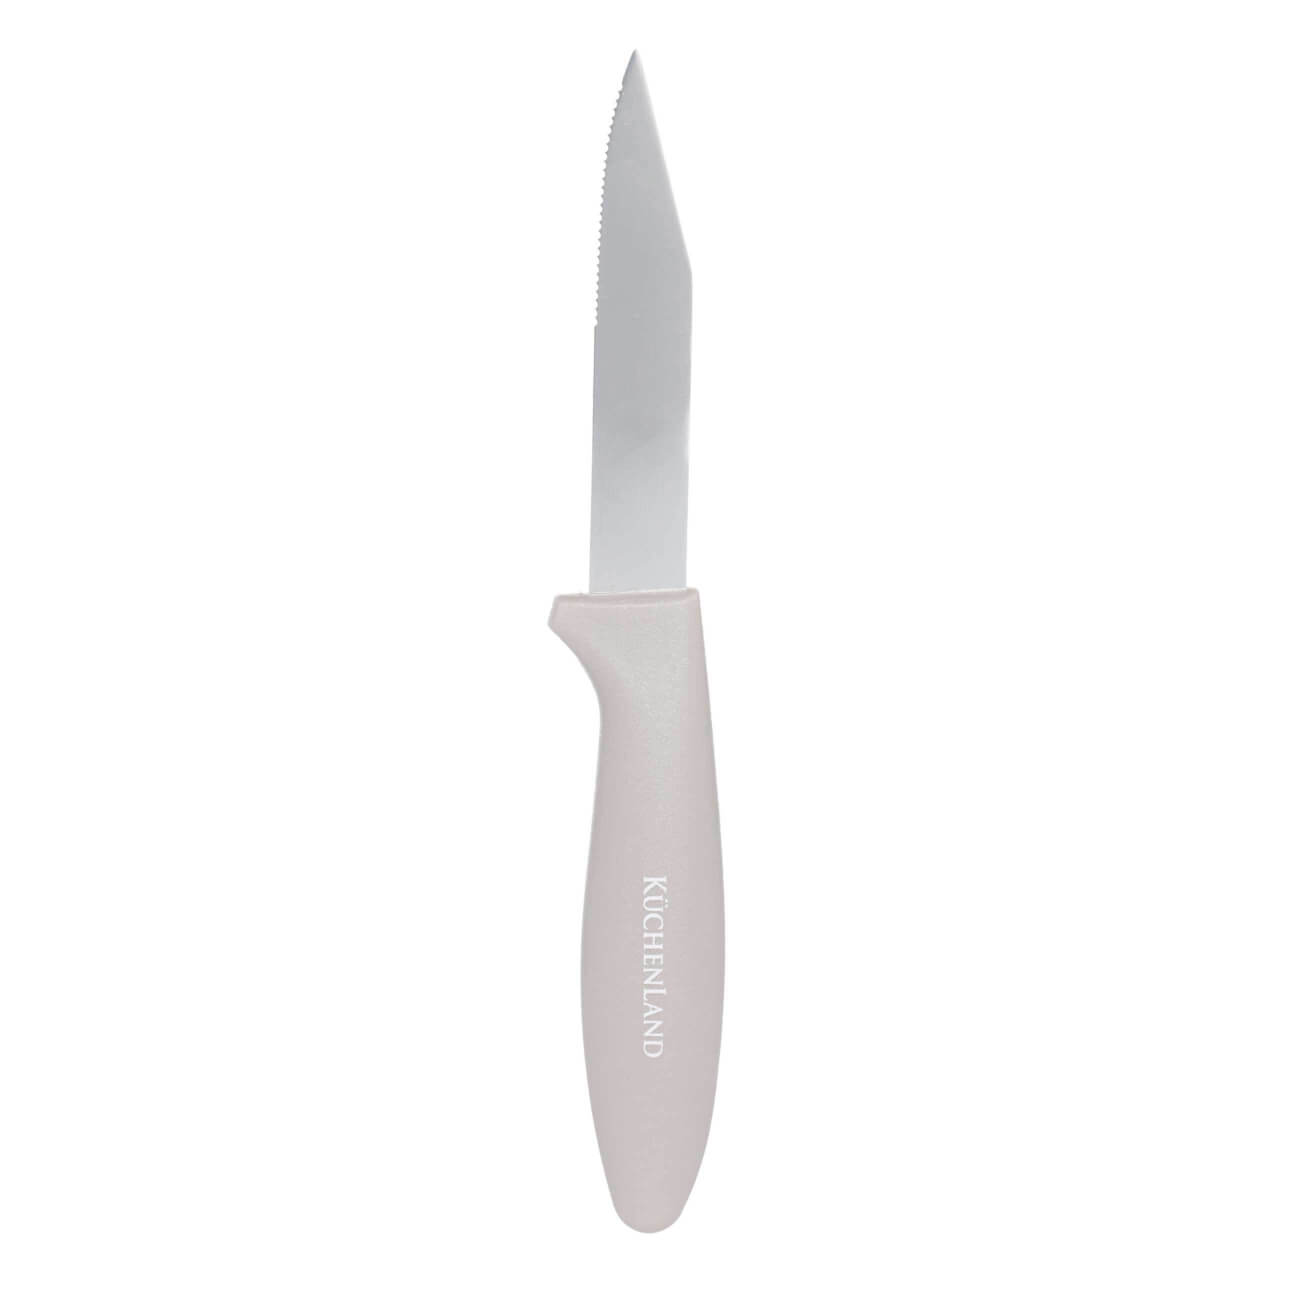 Нож для чистки овощей, 8 см, сталь/пластик, серо-коричневый, Regular нож для чистки овощей 6 см сталь пластик серо коричневый regular